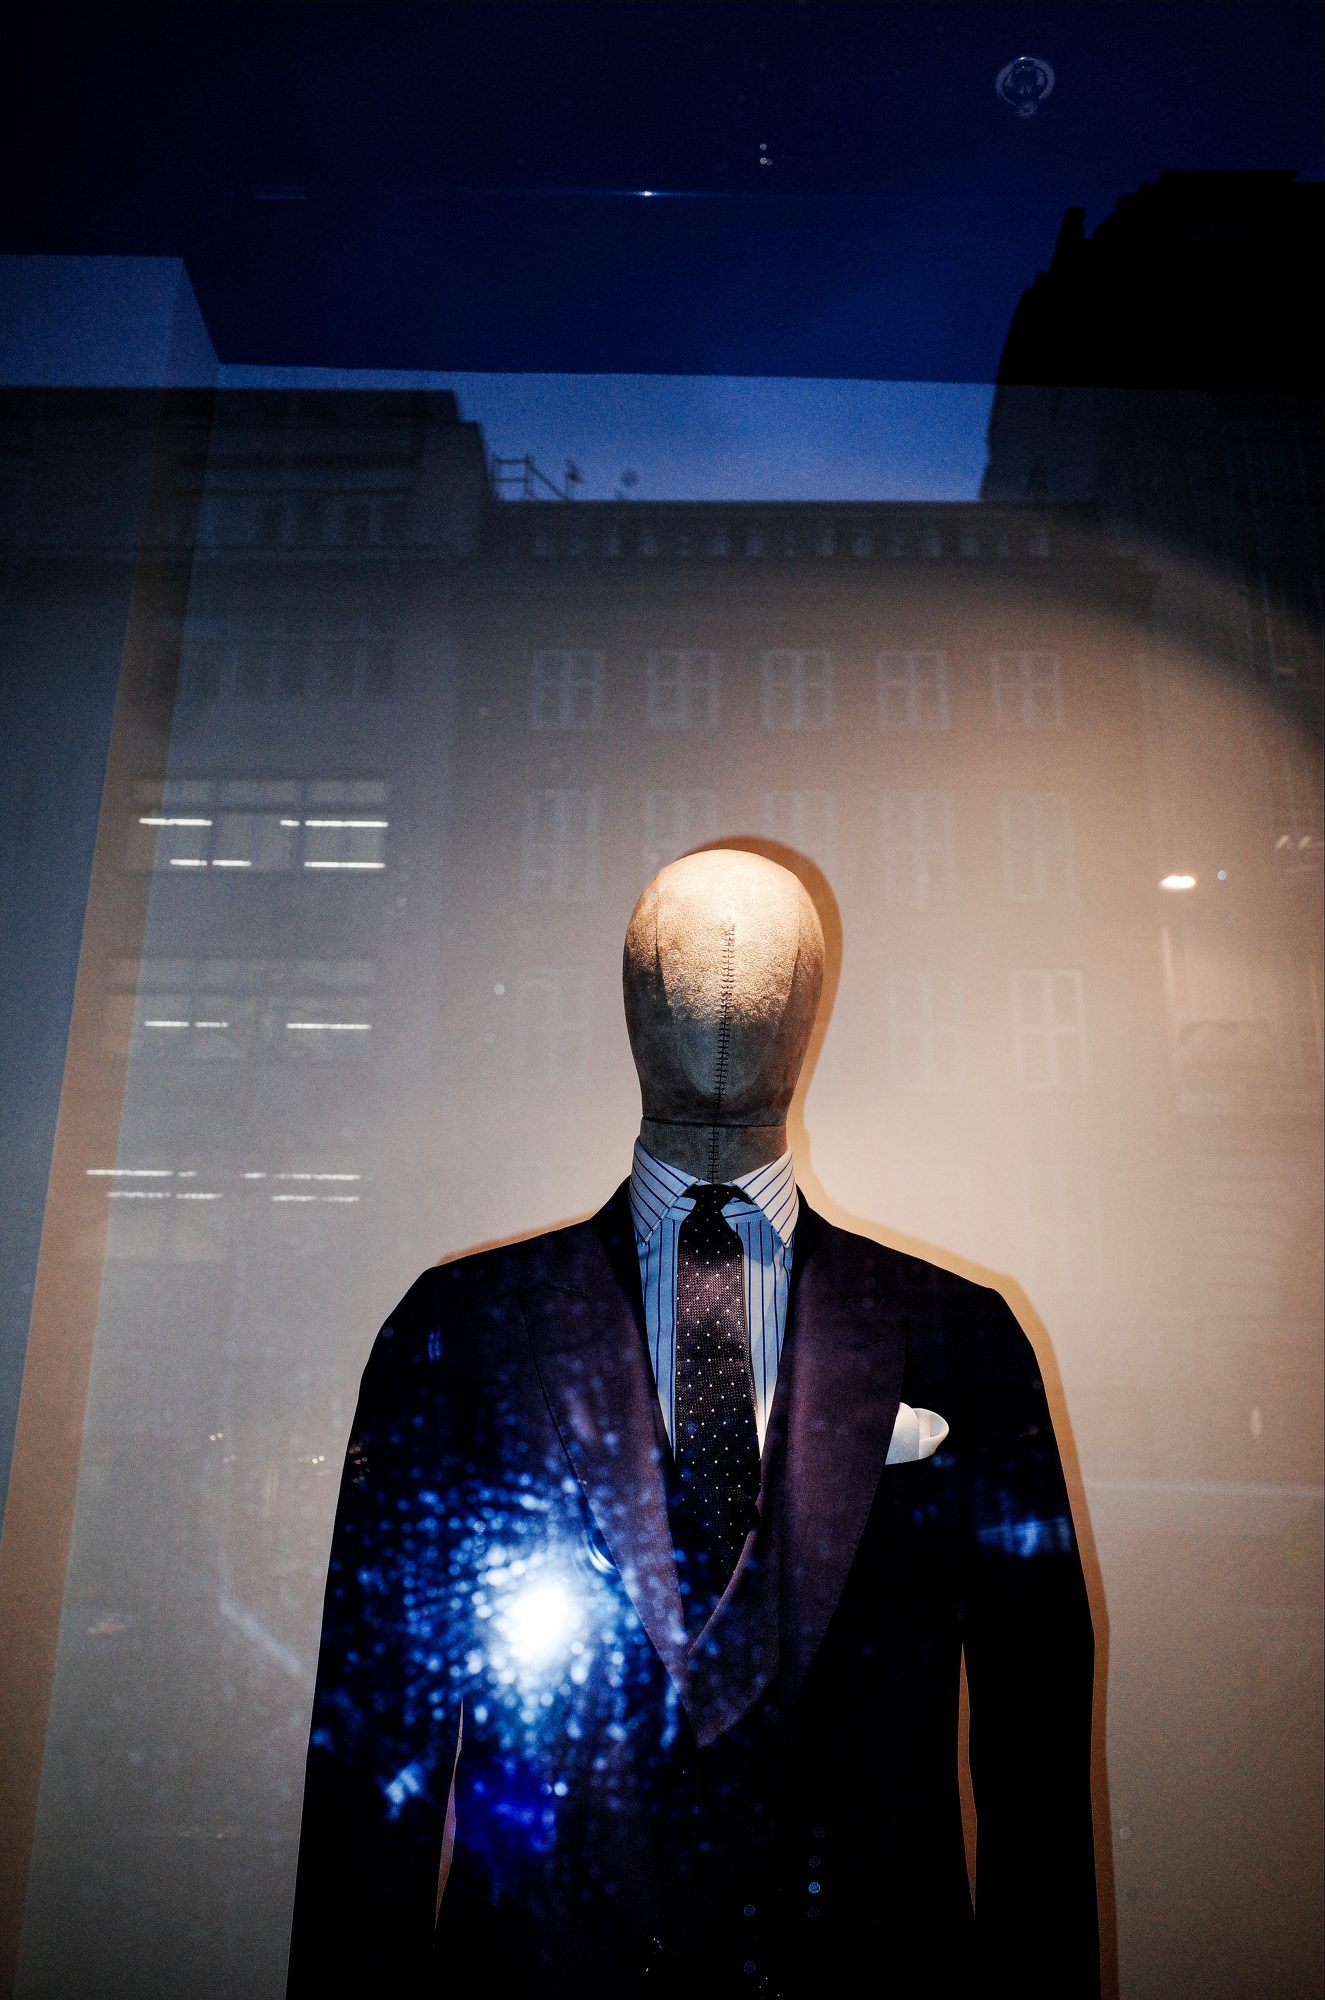 Mannequin suit in London storefront, 2018